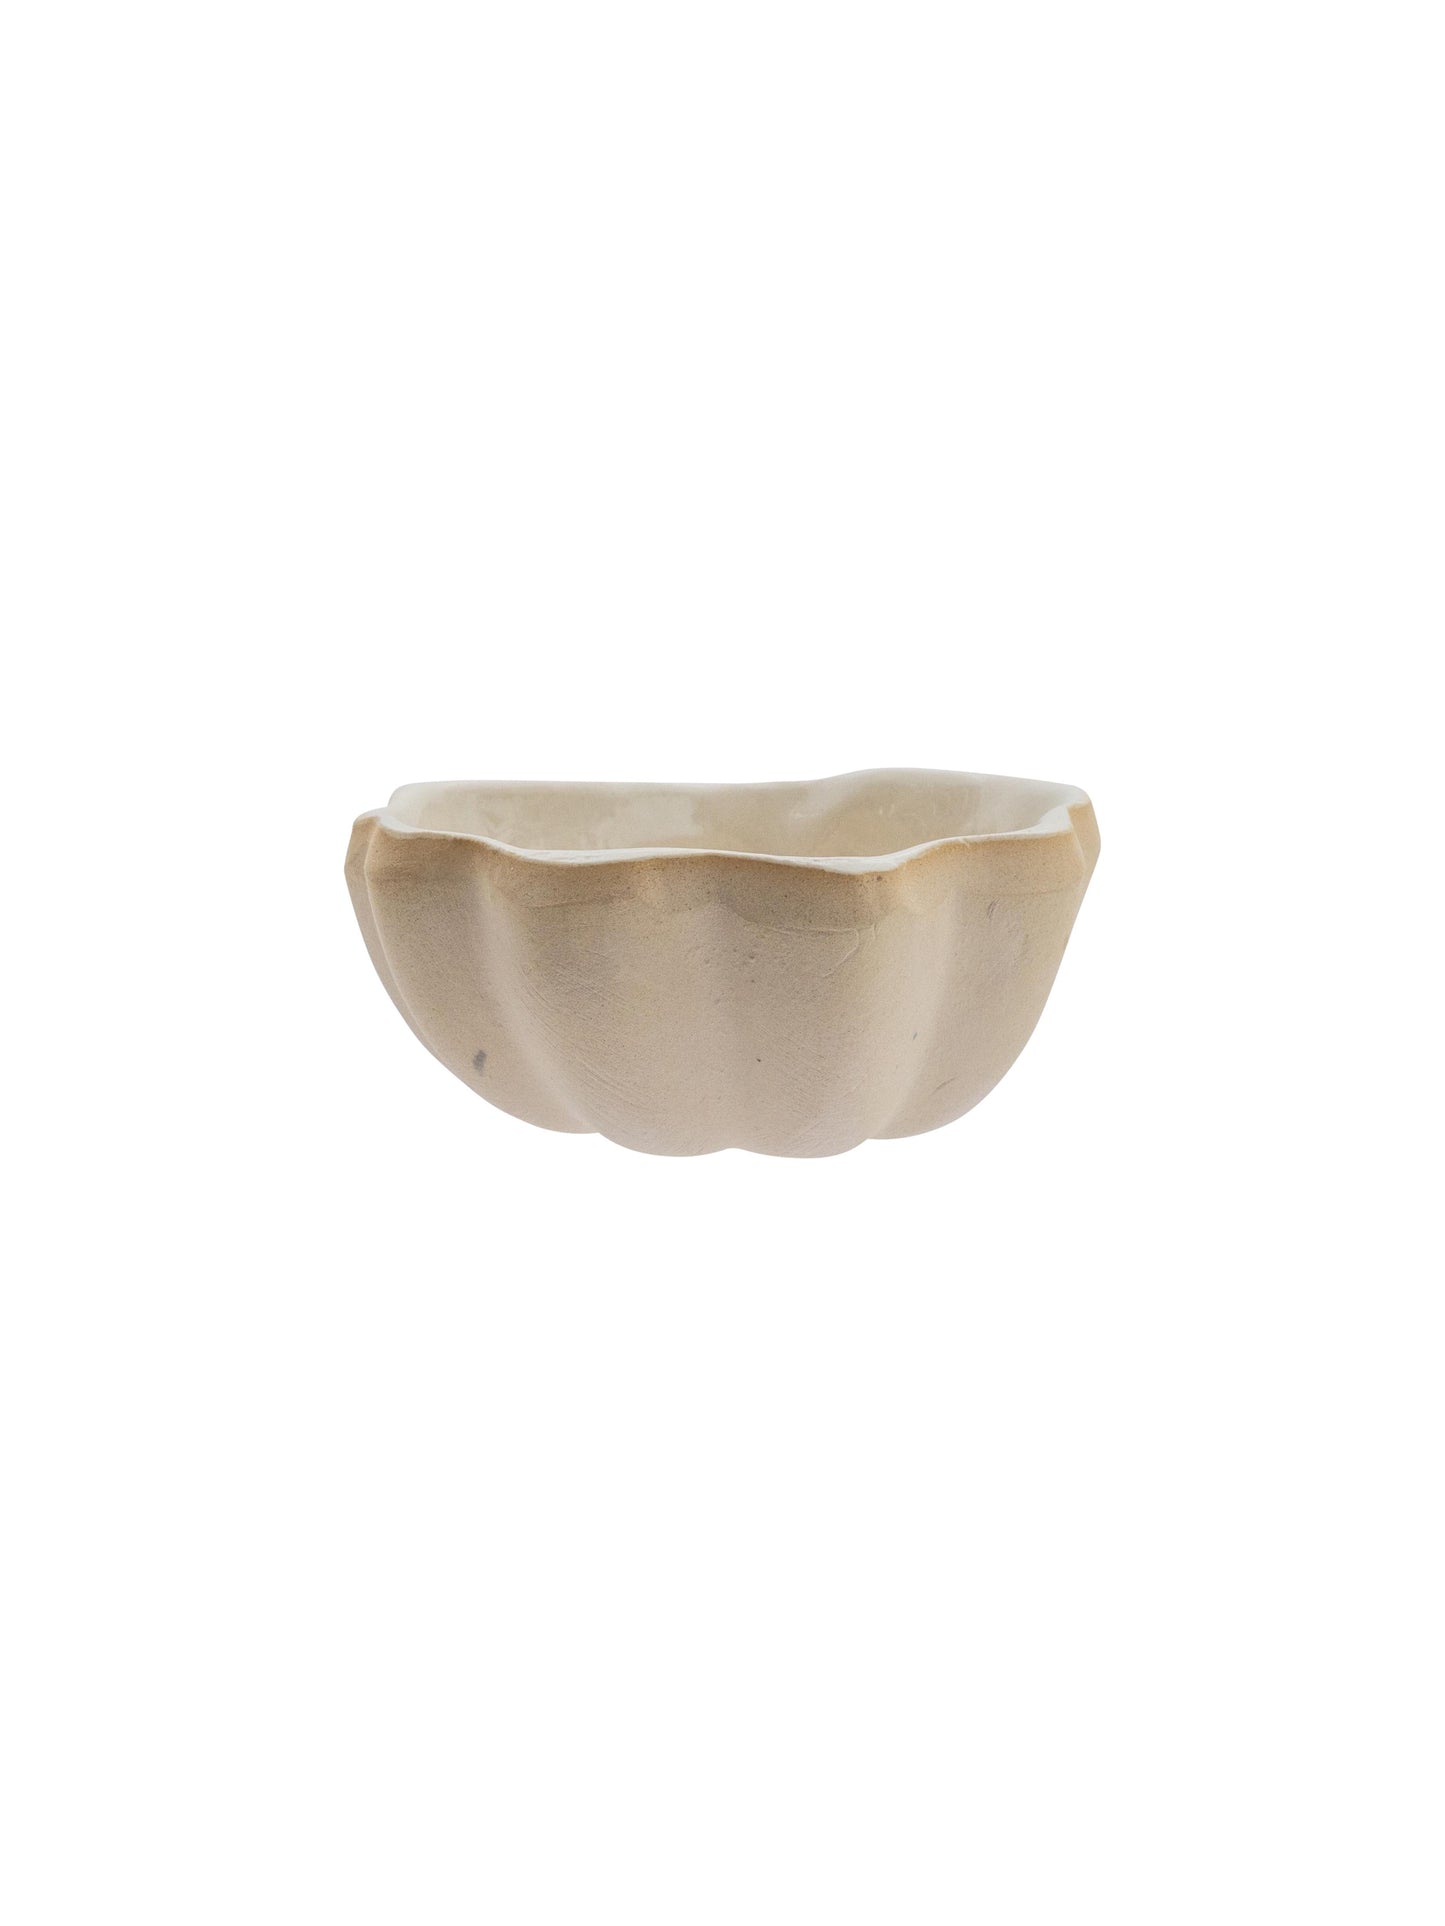 Terrafirma Ceramics Ivory Mini Scallop Bowl Weston Table